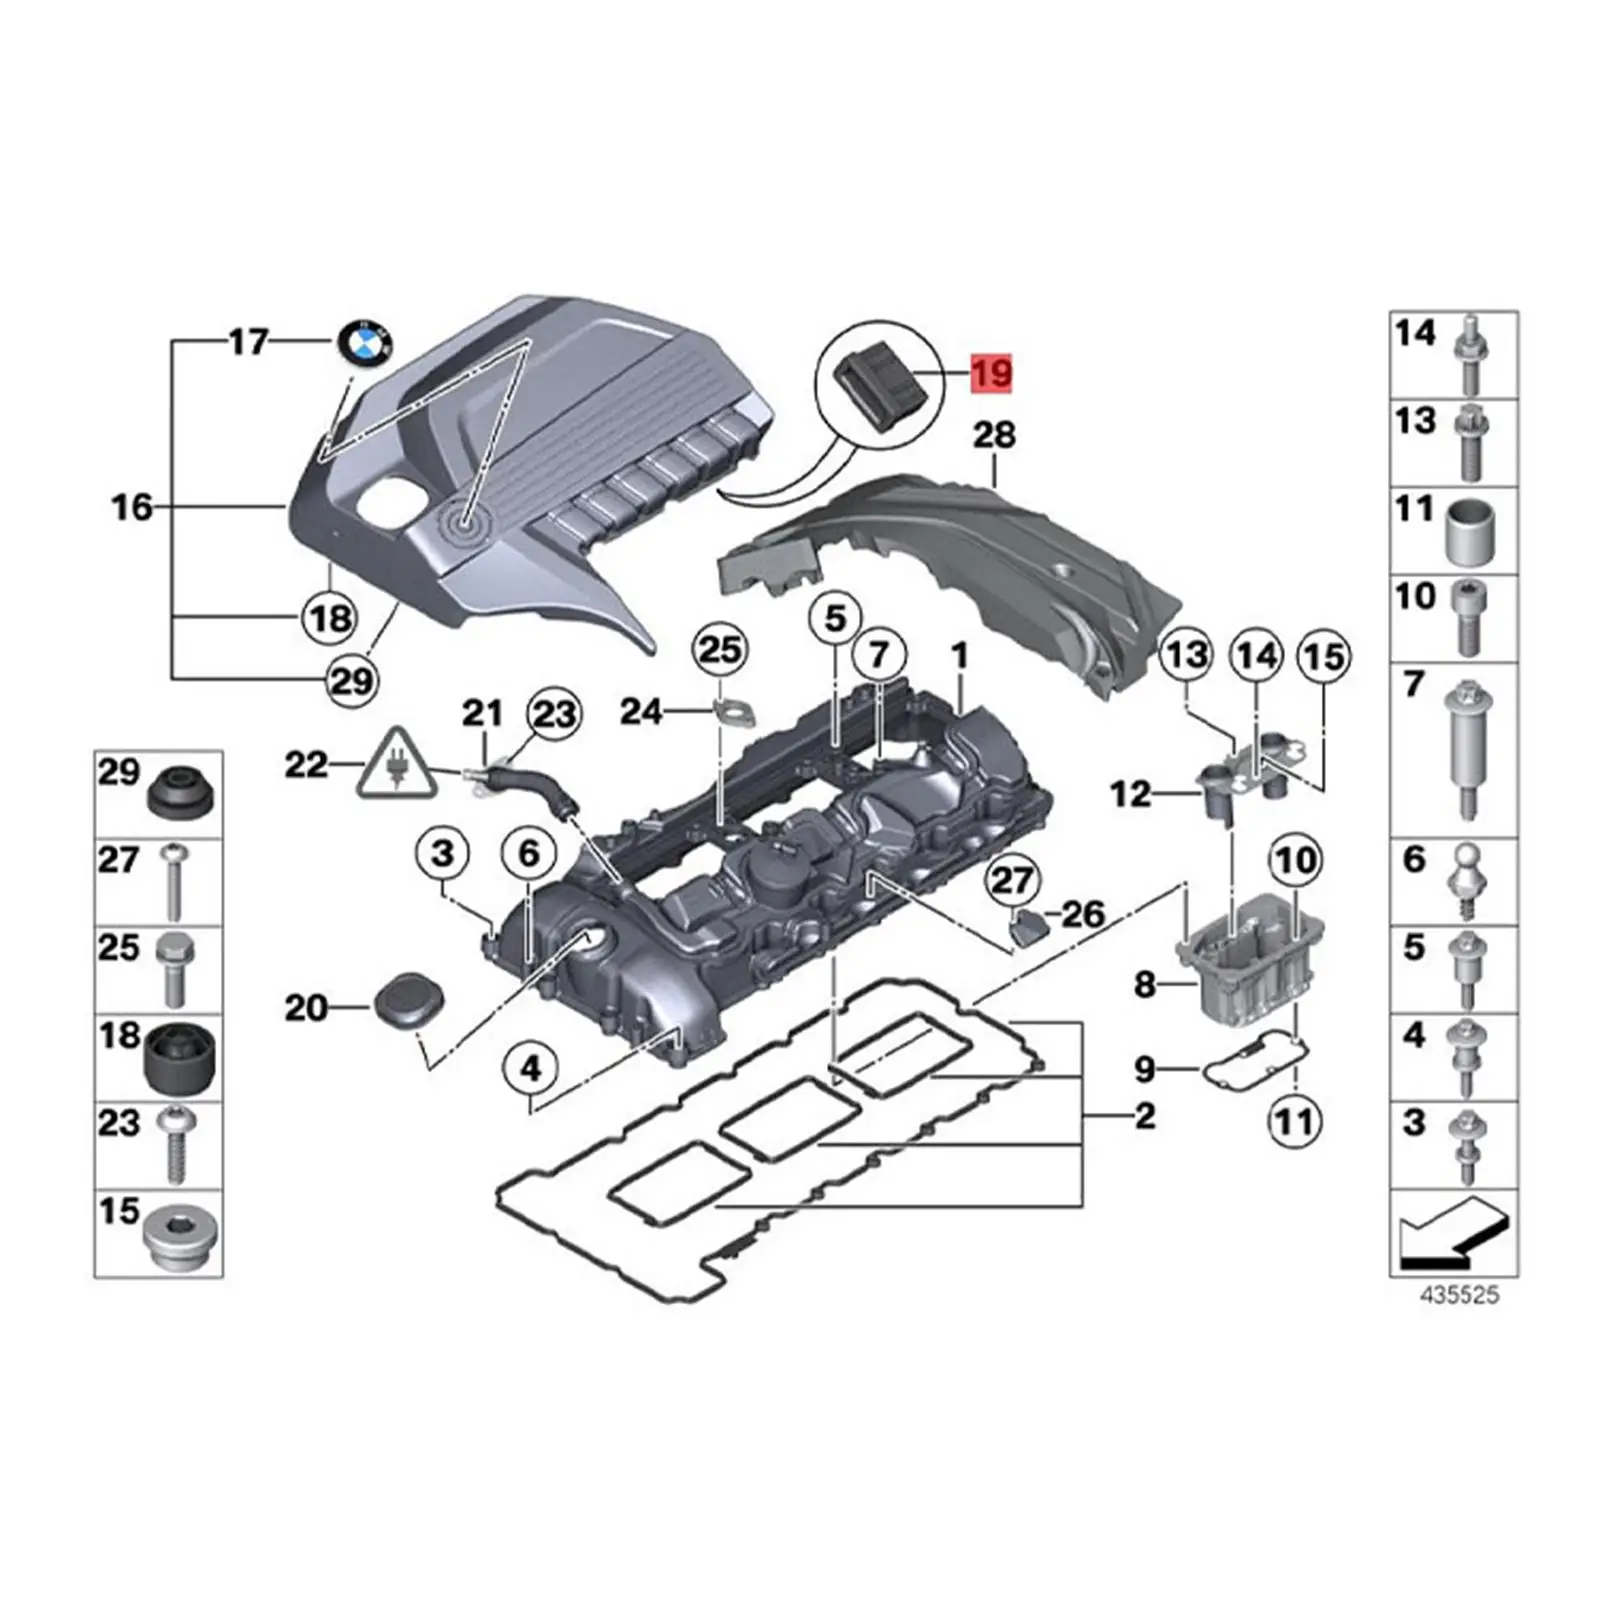 Rubber Engine Upper Radiator Mounts Repair Parts for BMW E32 735i E38 740il E39 528i E39 540i E34 540i